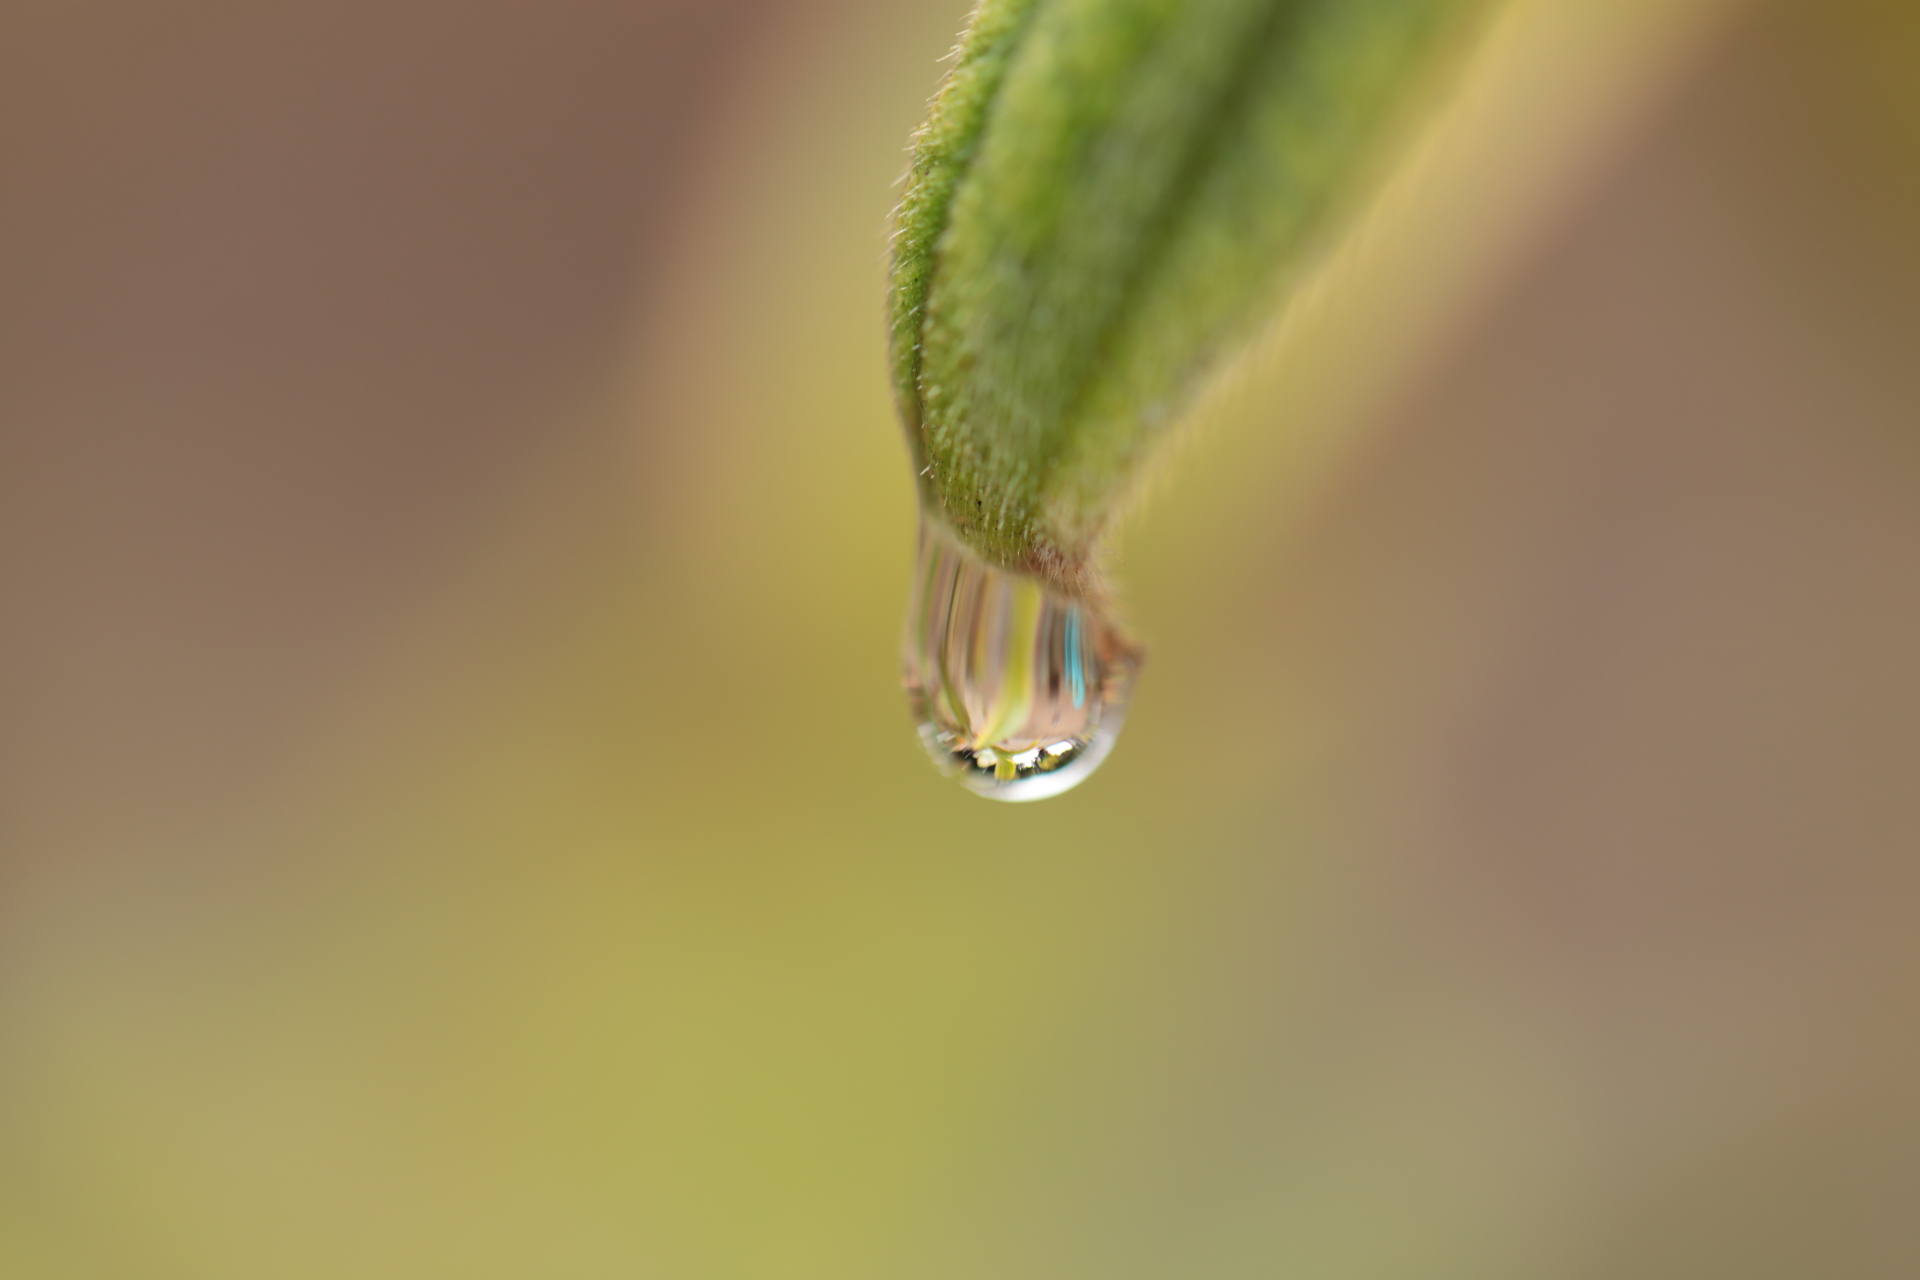 Raindrop Hanging from Leaf (Jan 23, 2021)